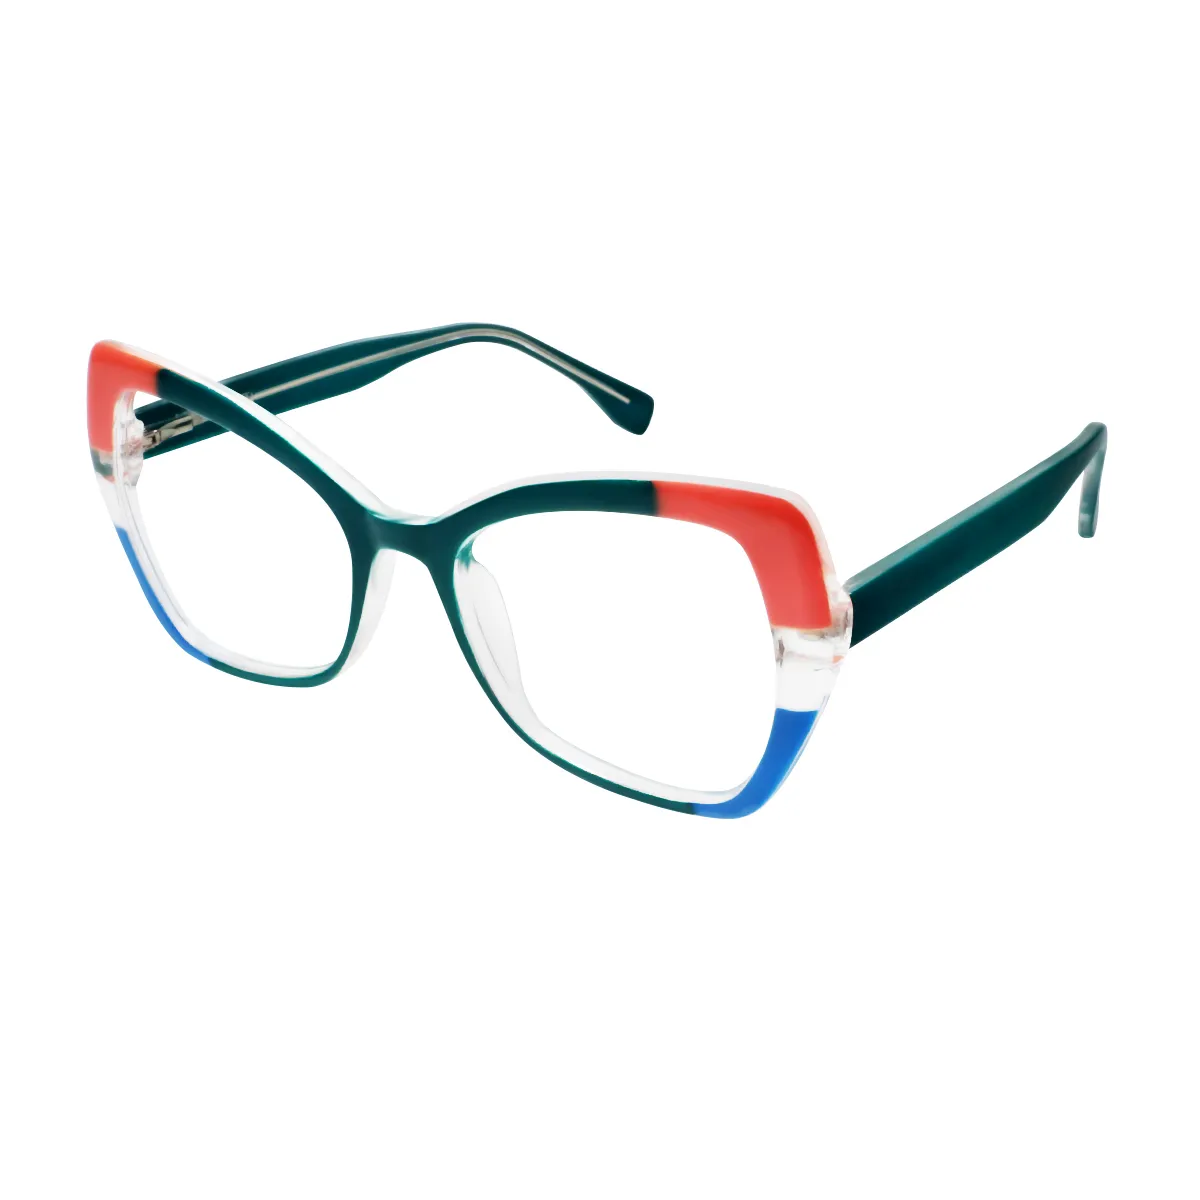 Hubris - Cat-eye Green-Red Glasses for Women - EFE